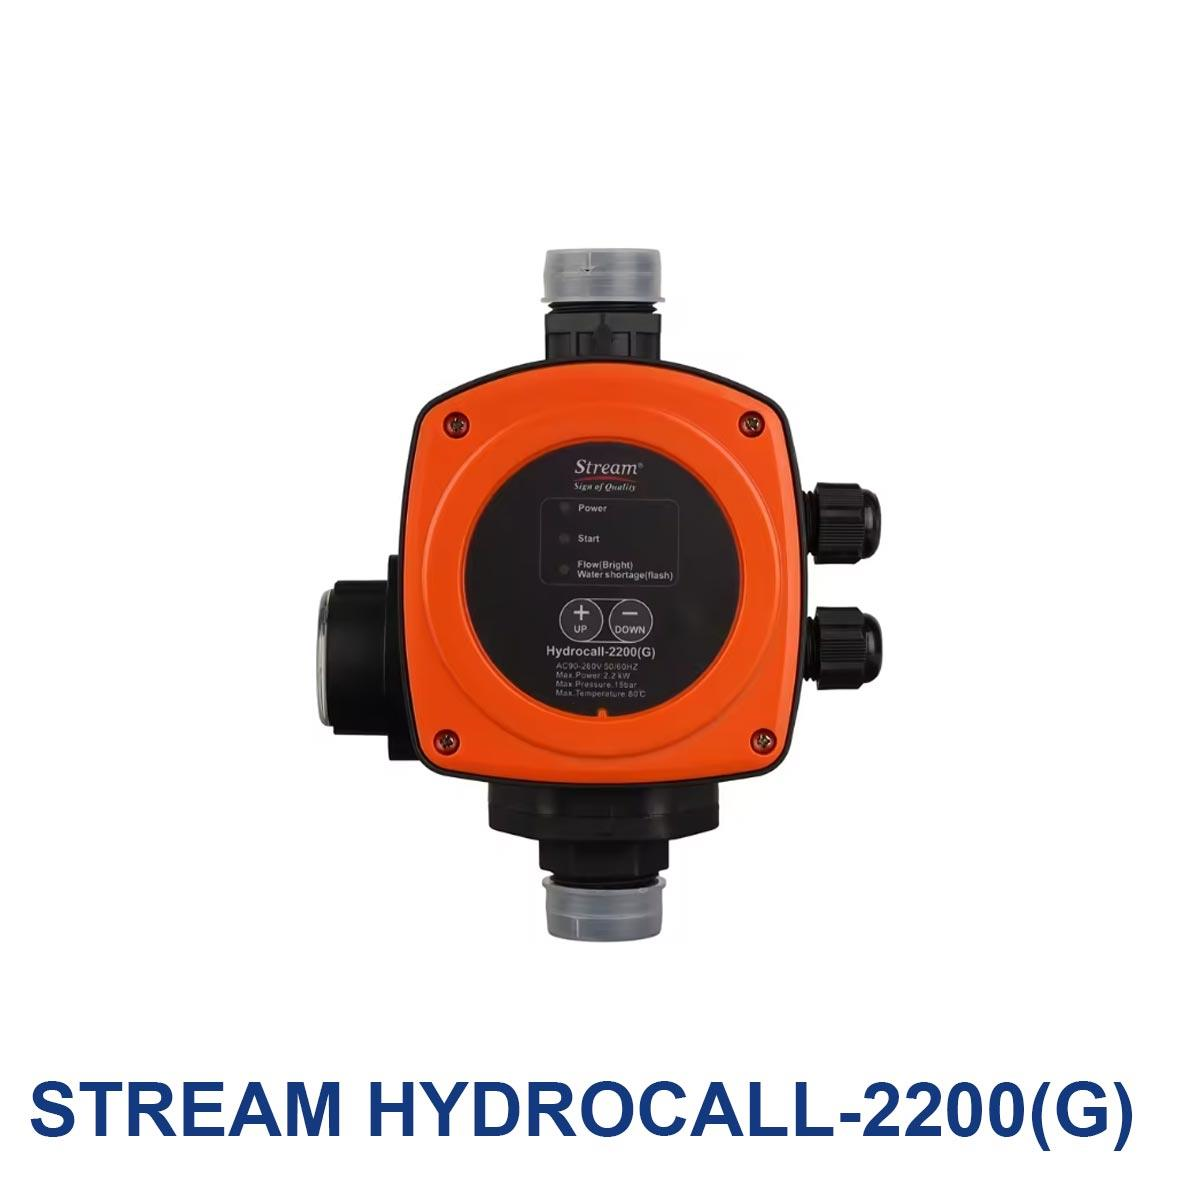 STREAM-HYDROCALL-2200(G)